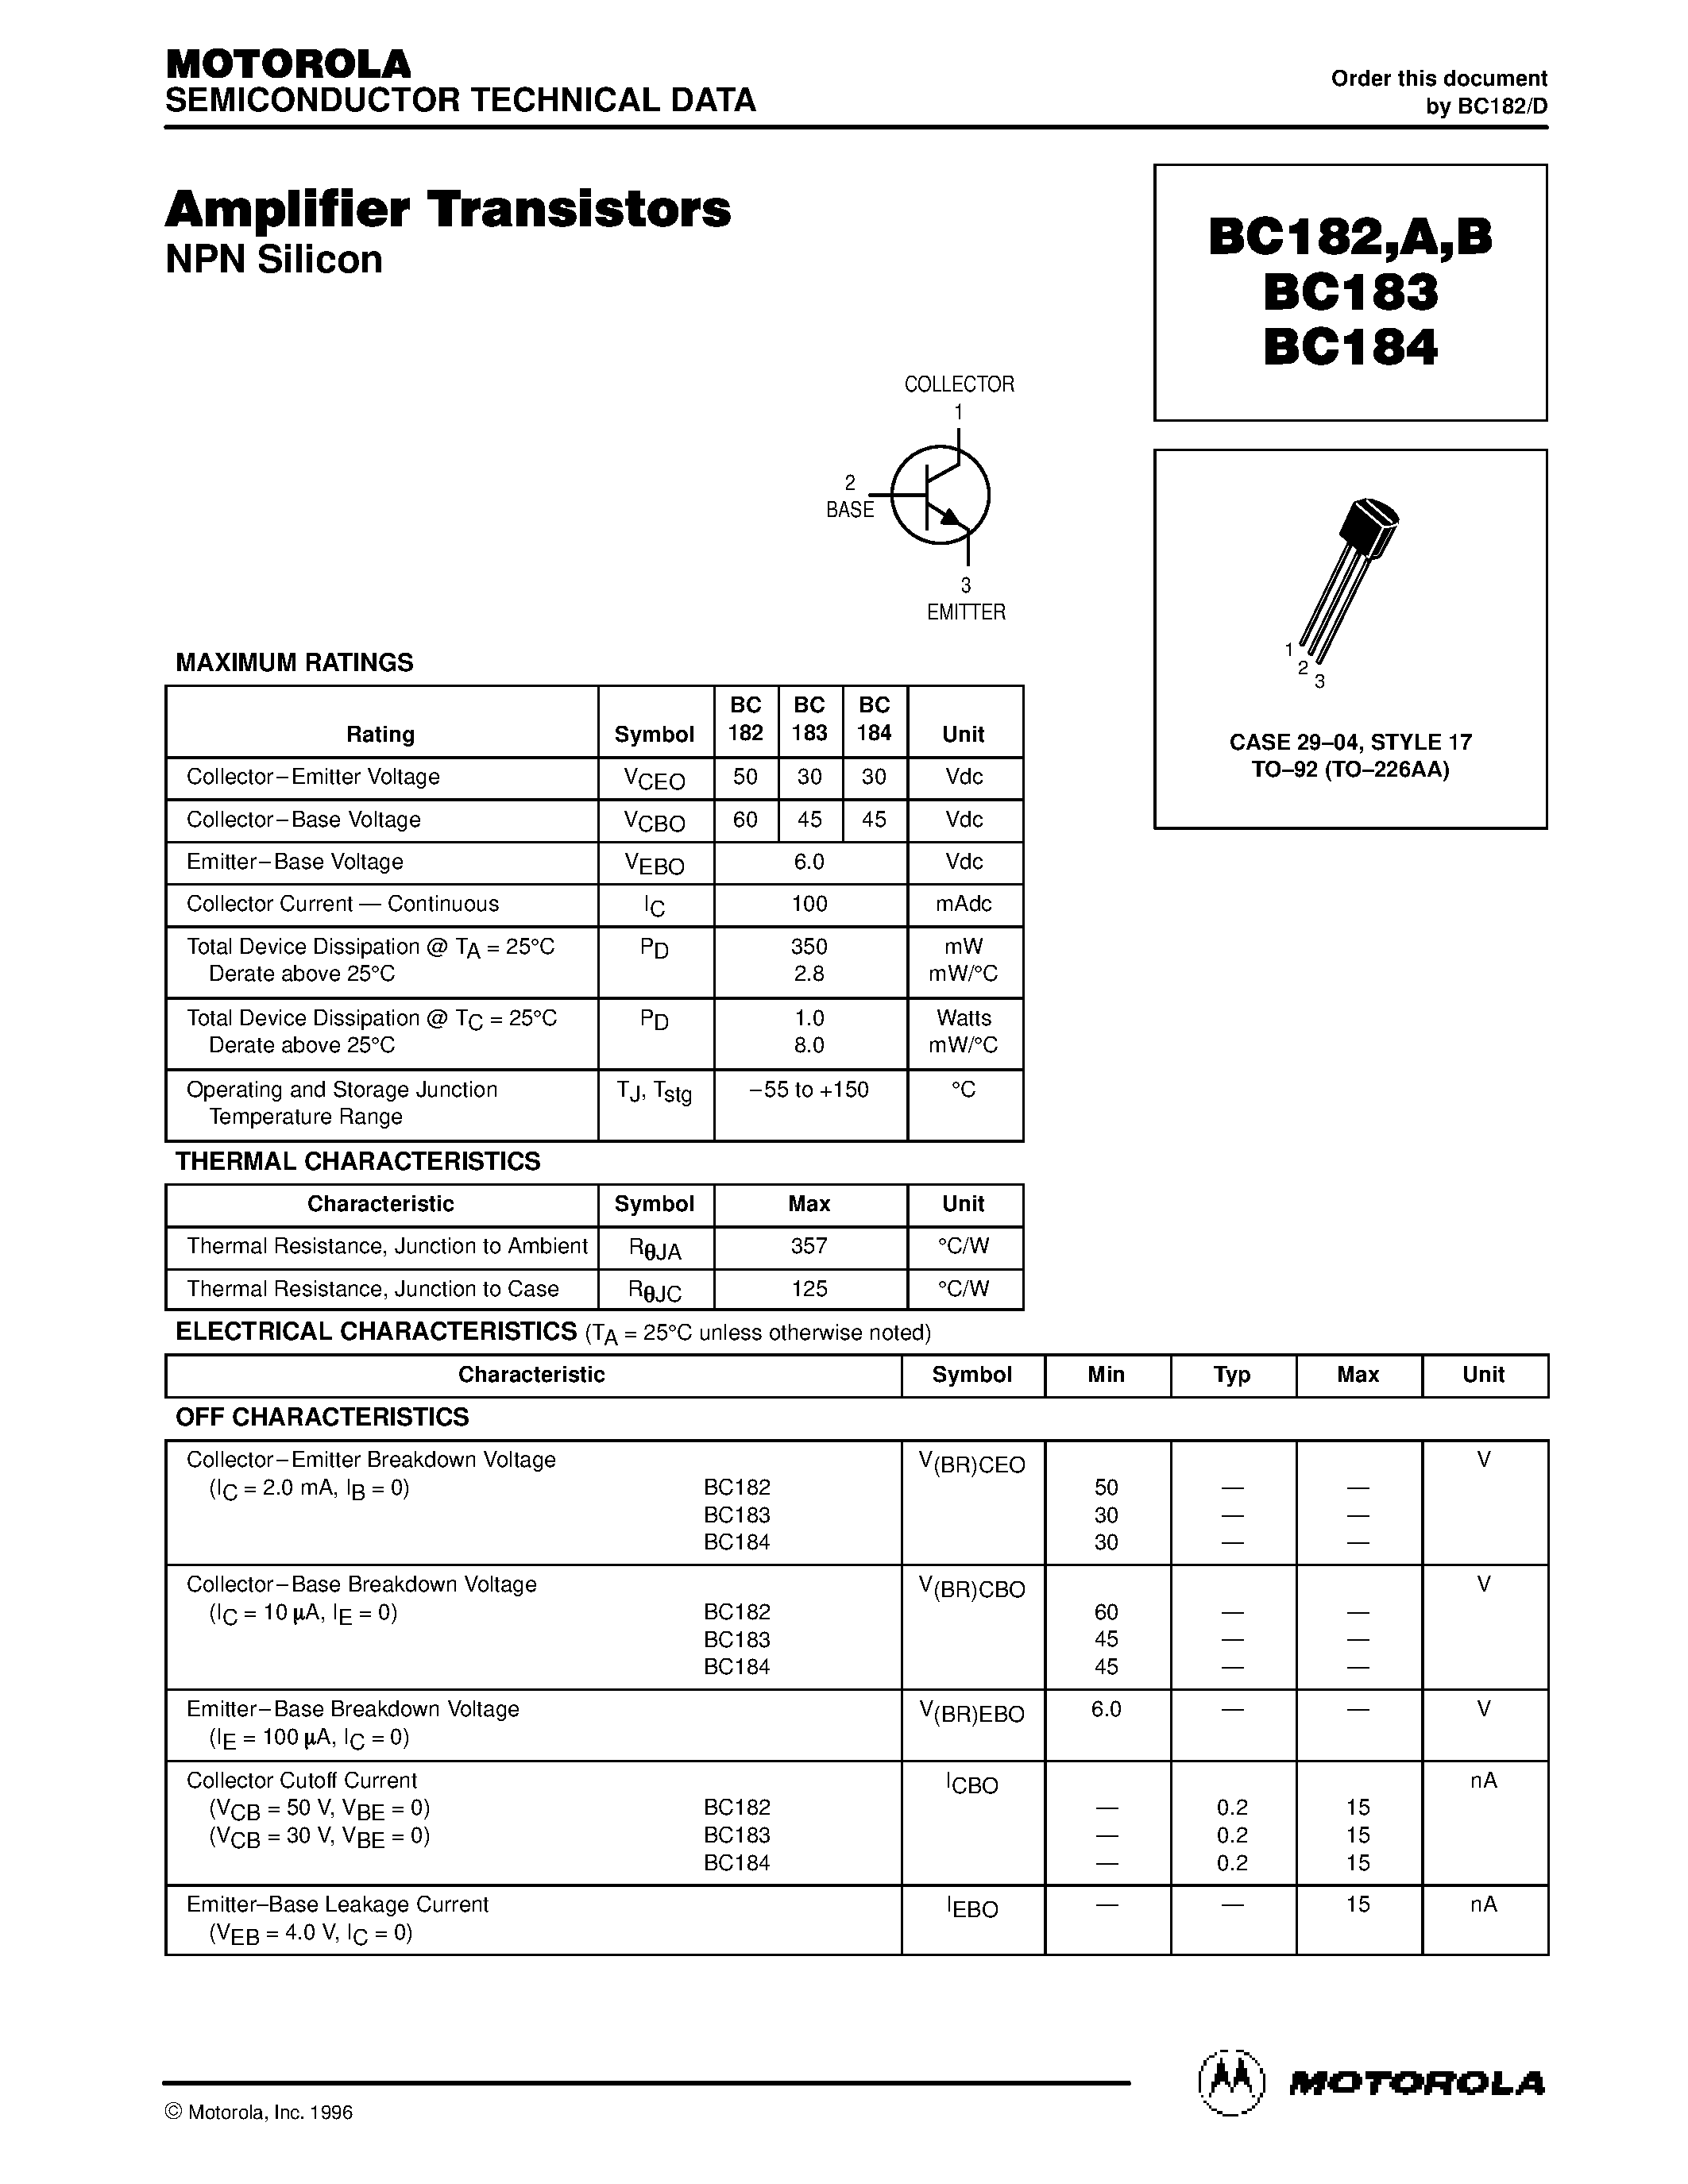 Datasheet BC182B - Amplifier Transistors(NPN) page 1